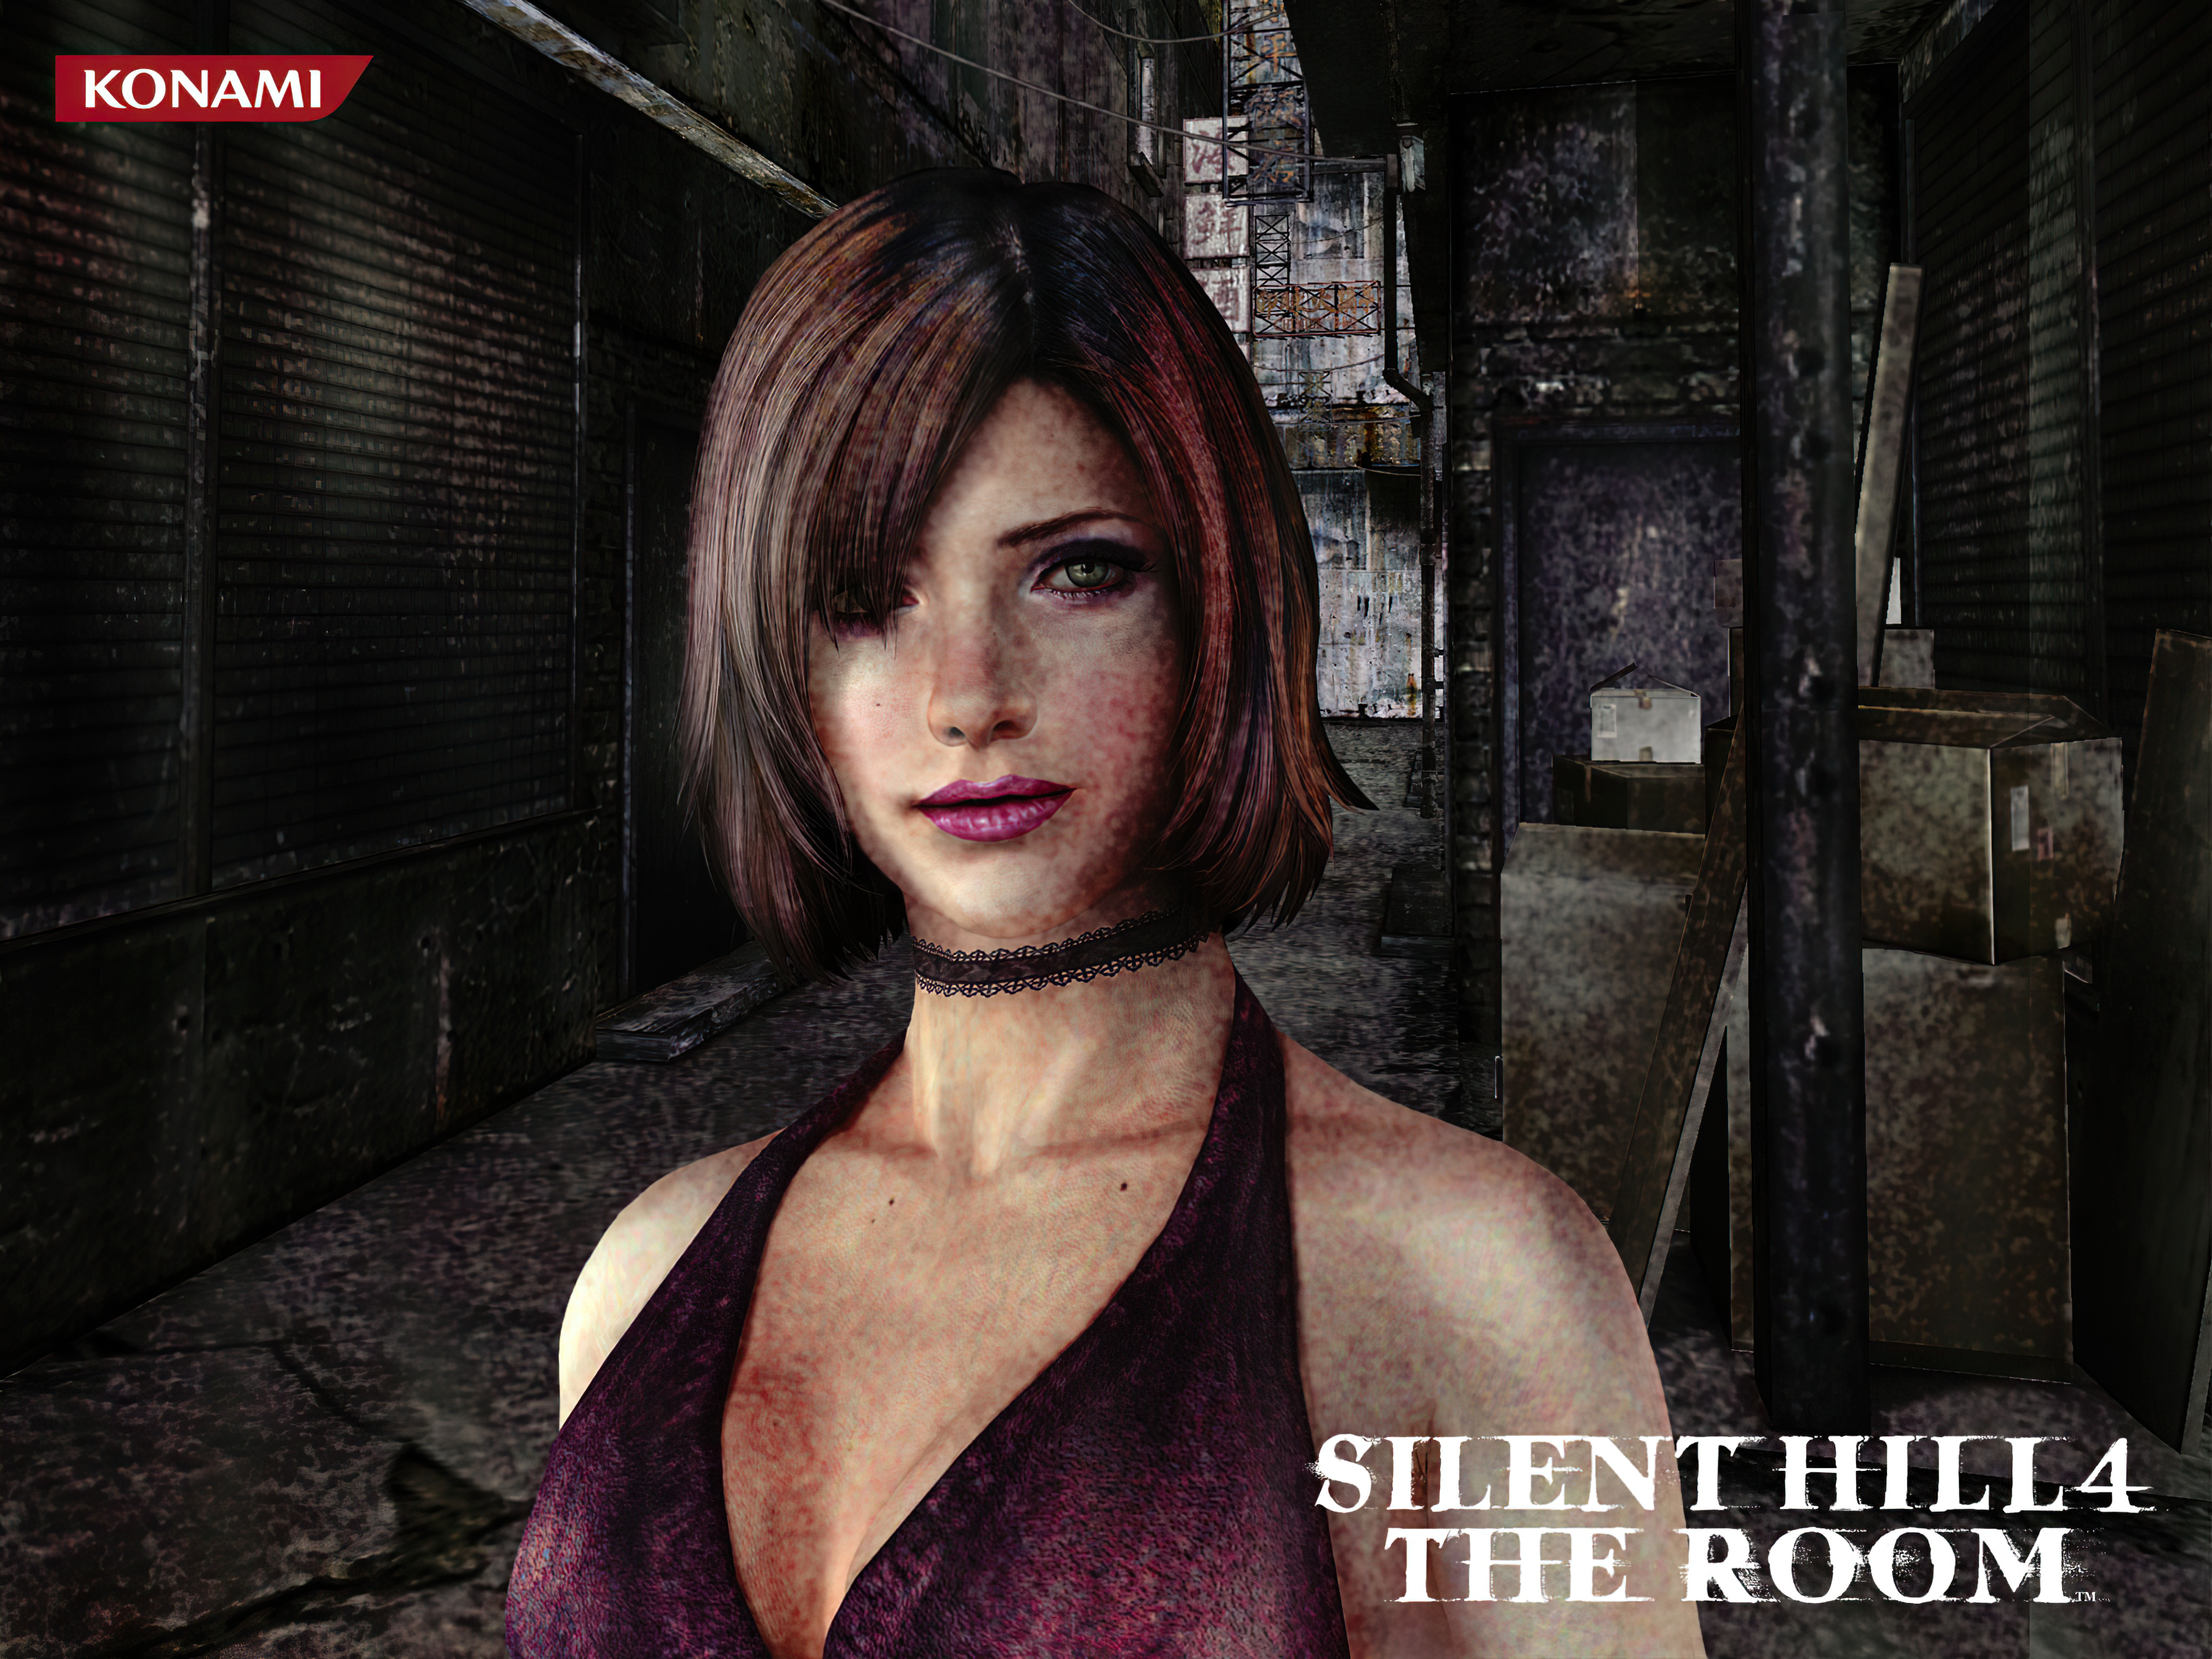 Baixar papel de parede para celular de Silent Hill, Videogame gratuito.